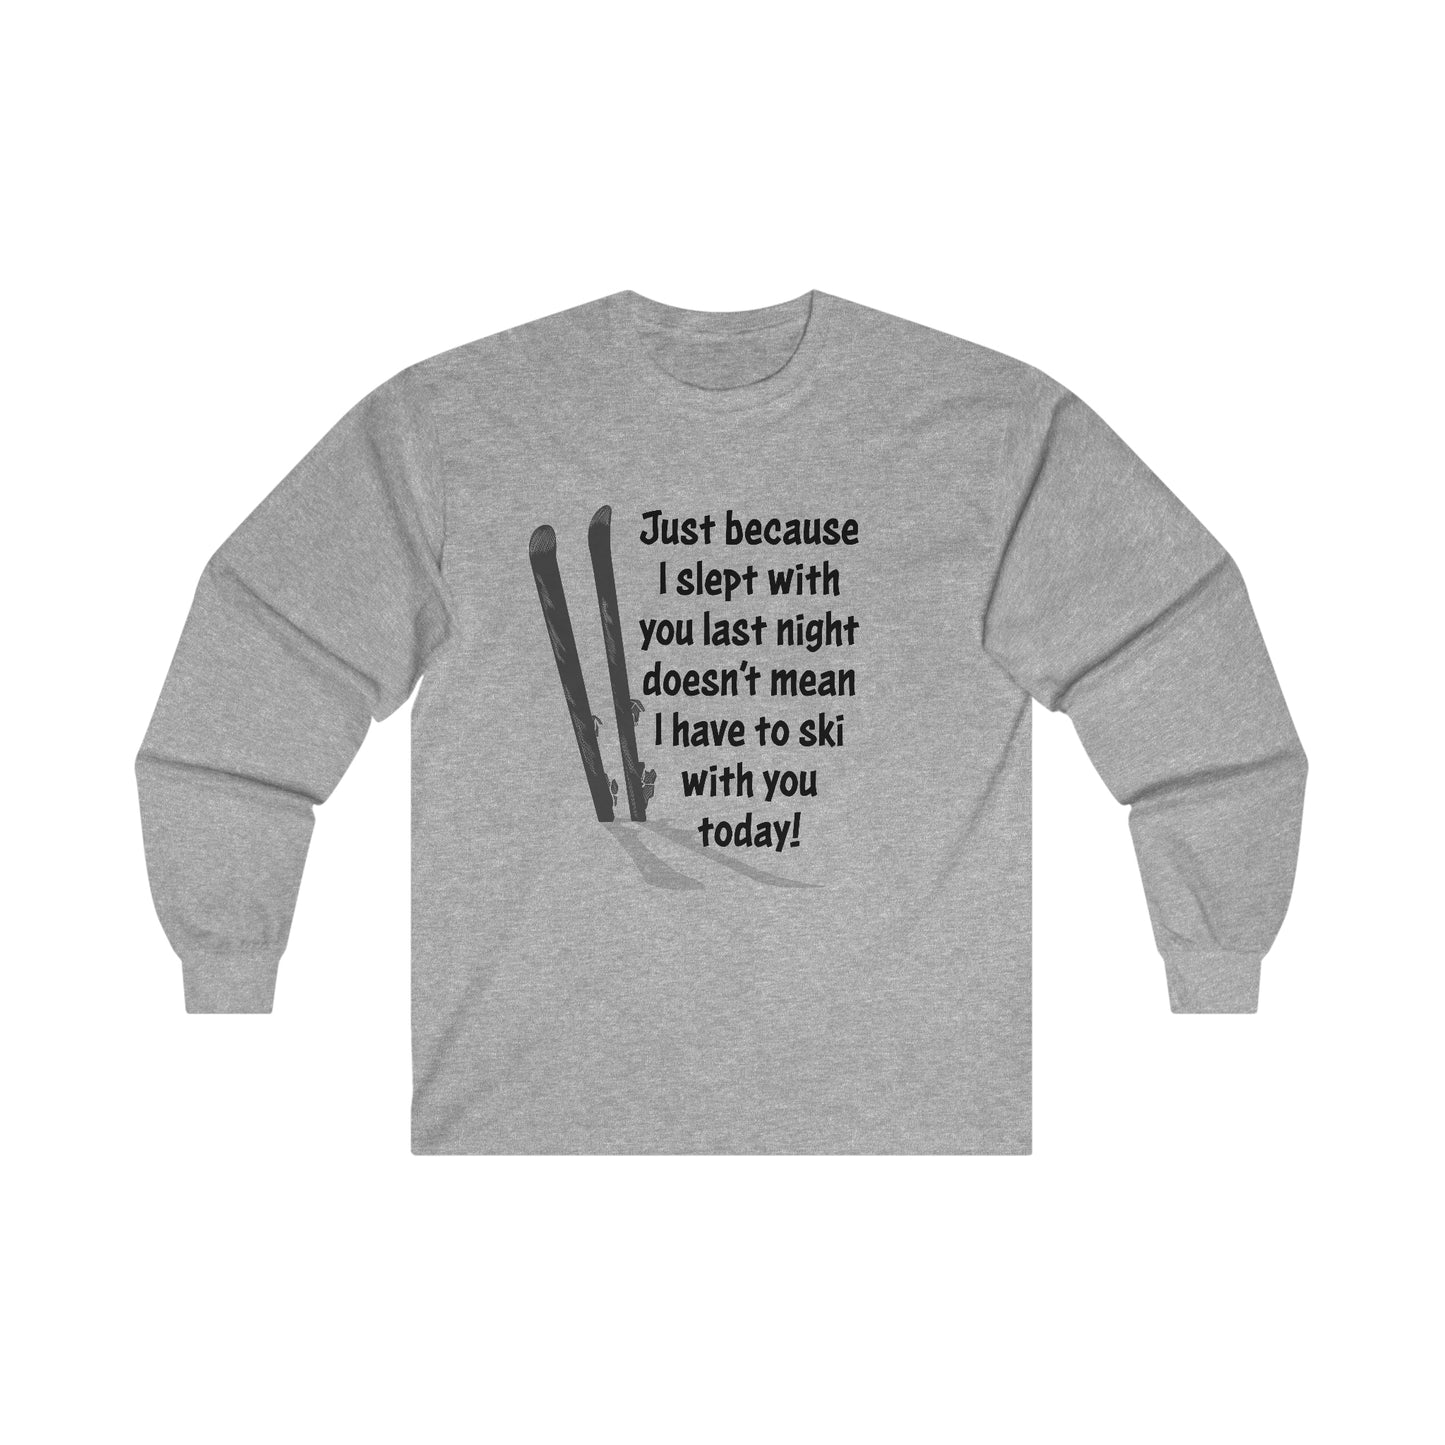 Ski T-Shirt For Ski Bum TShirt For Skier T Shirt For Skiing Shirt For Snow Day Shirt For Skier Tee For Funny Shirt For Sarcastic Humor Gift